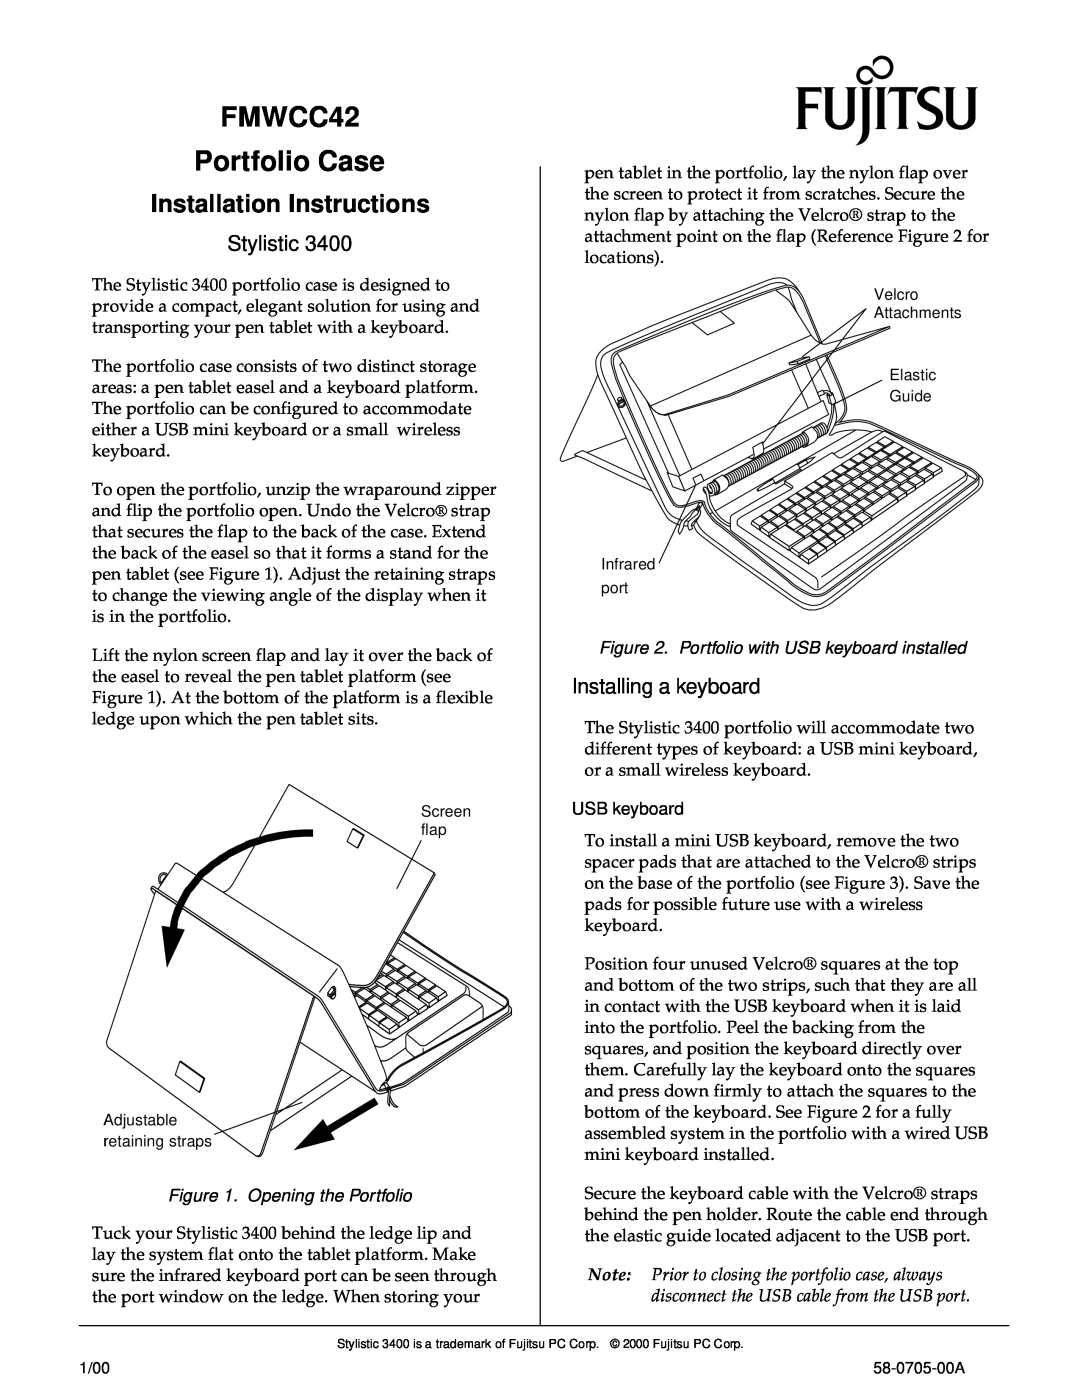 Fujitsu FMWCC42 installation instructions Opening the Portfolio, Portfolio with USB keyboard installed, Stylistic 